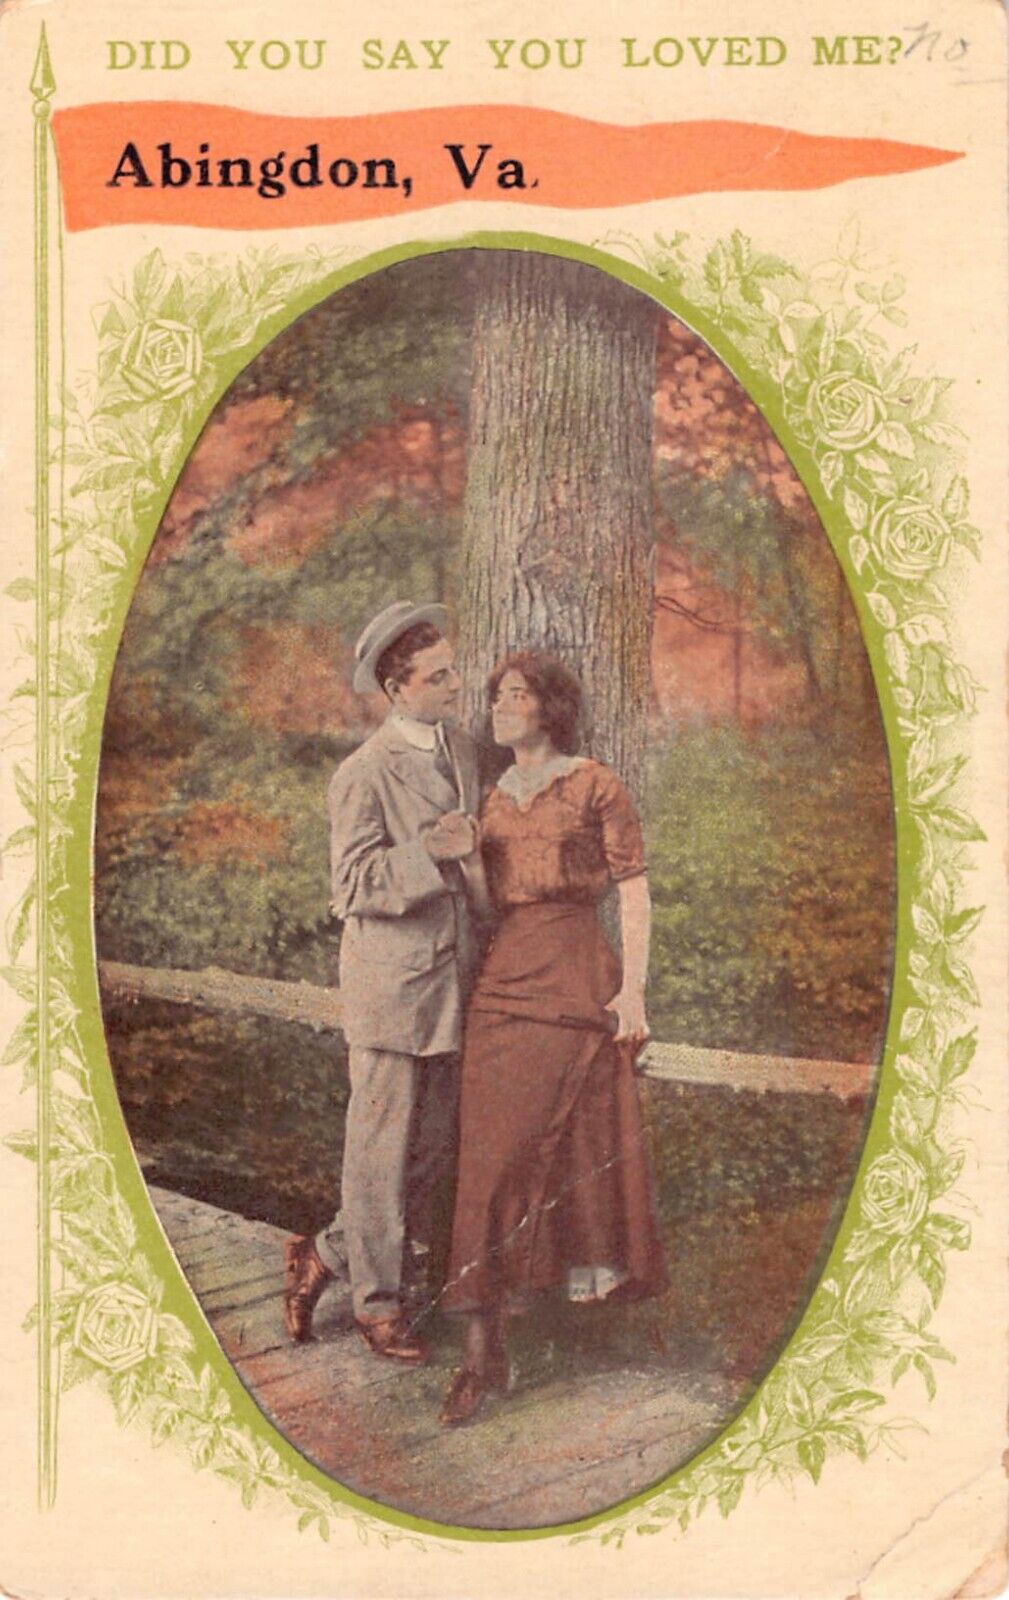 1913 Comic Bamforth Postcard-Lovers in Abingdon, Virginia-Did You Say You Love M